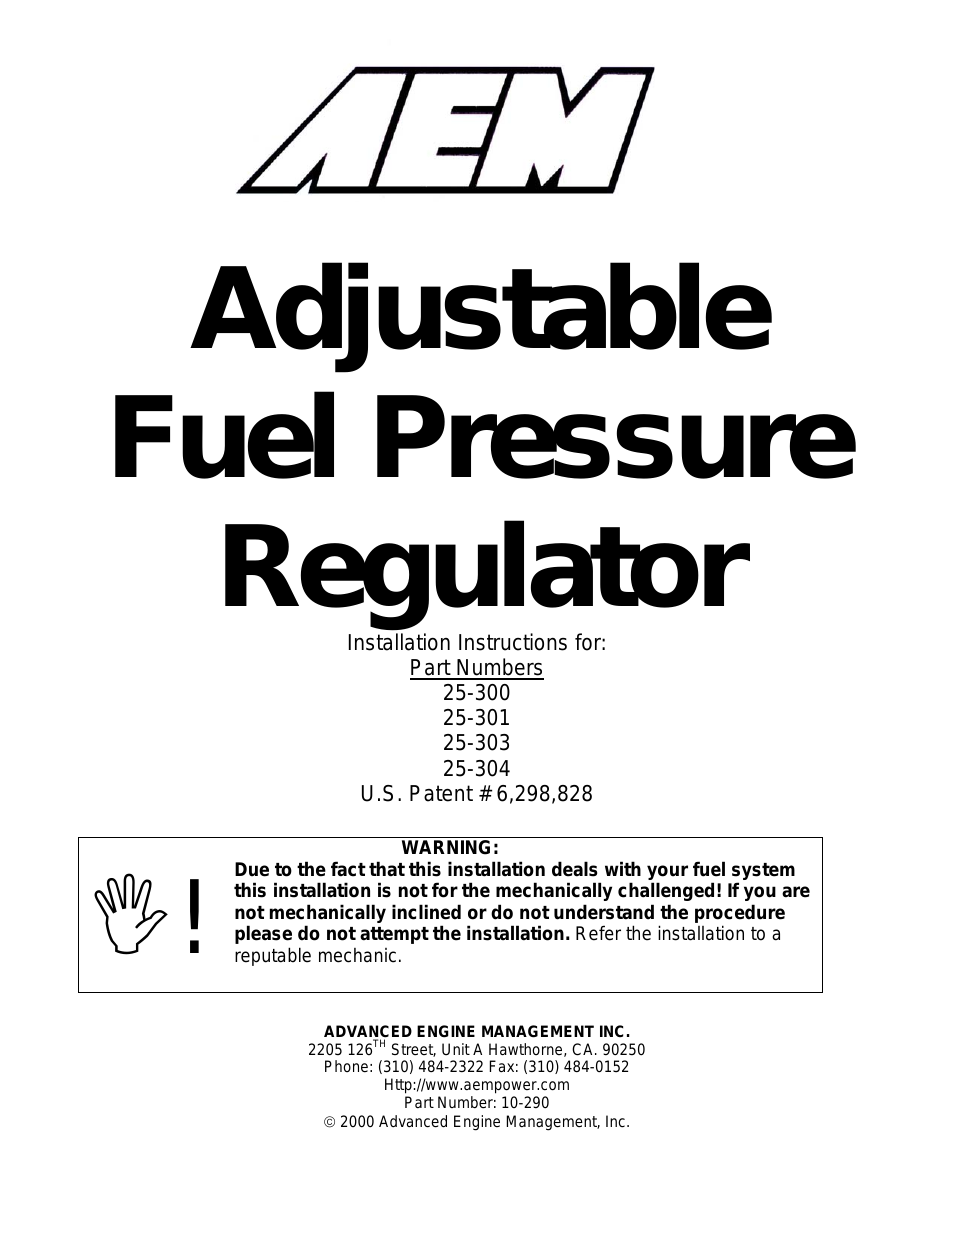 25-301BK Honda/Acura Adjustable Fuel Pressure Regualtor